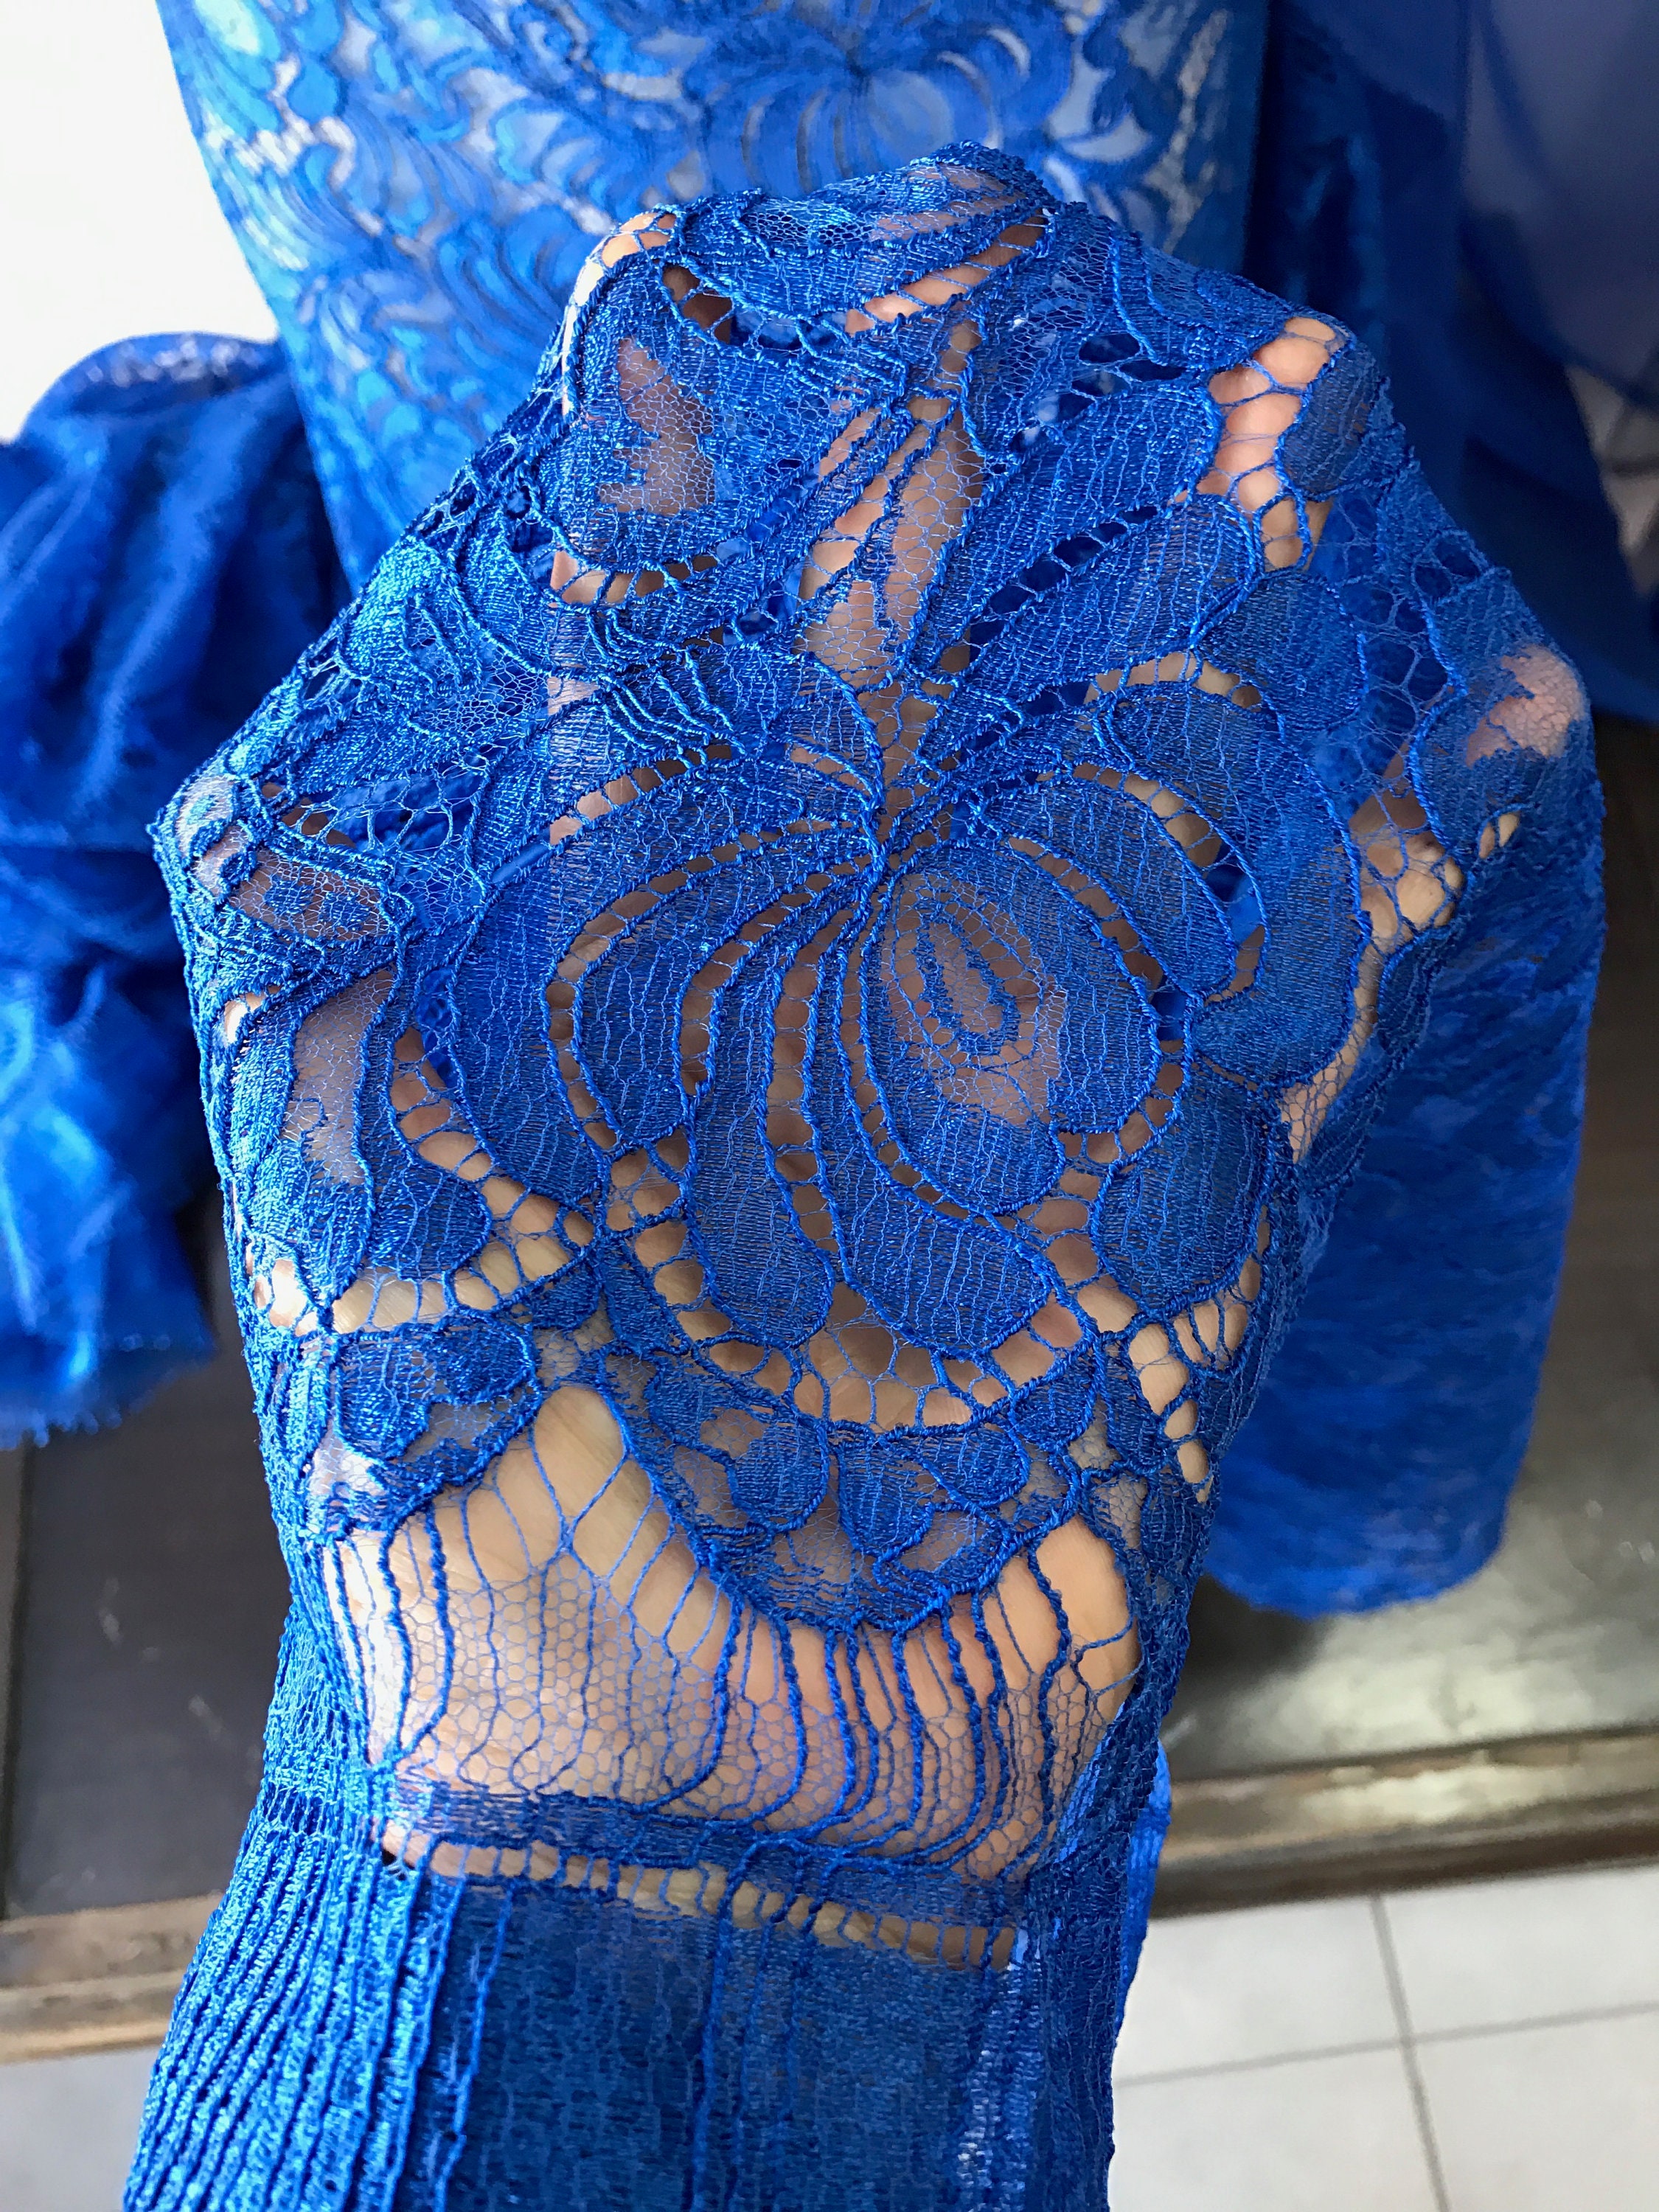 Cobalt blue lace fabric, Italian floral Lace scallop edge eyelash